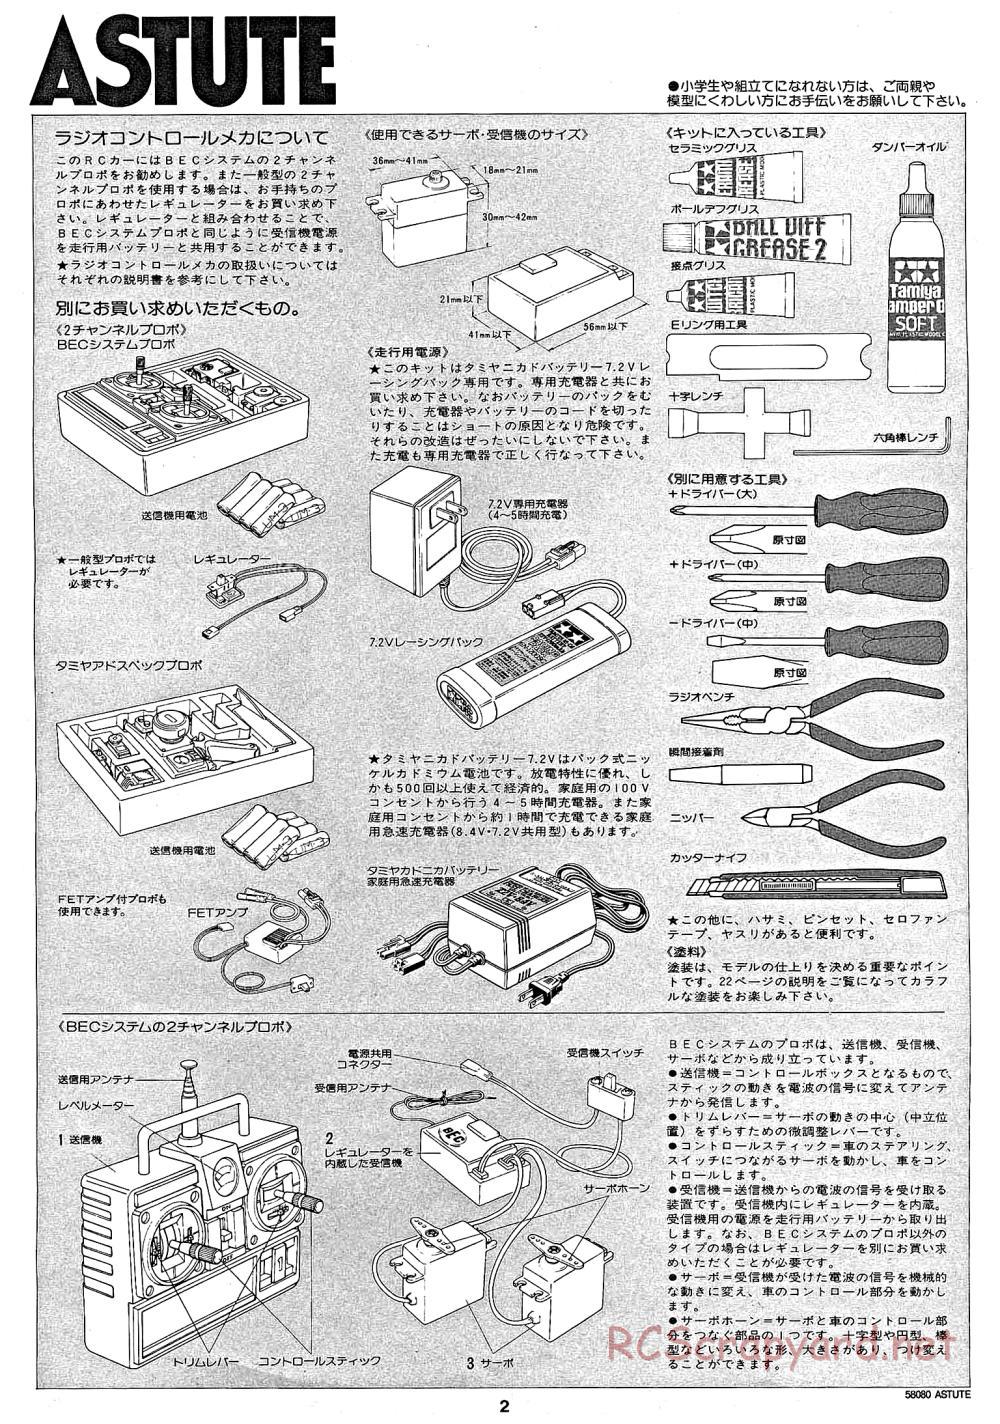 Tamiya - Astute - 58080 - Manual - Page 2